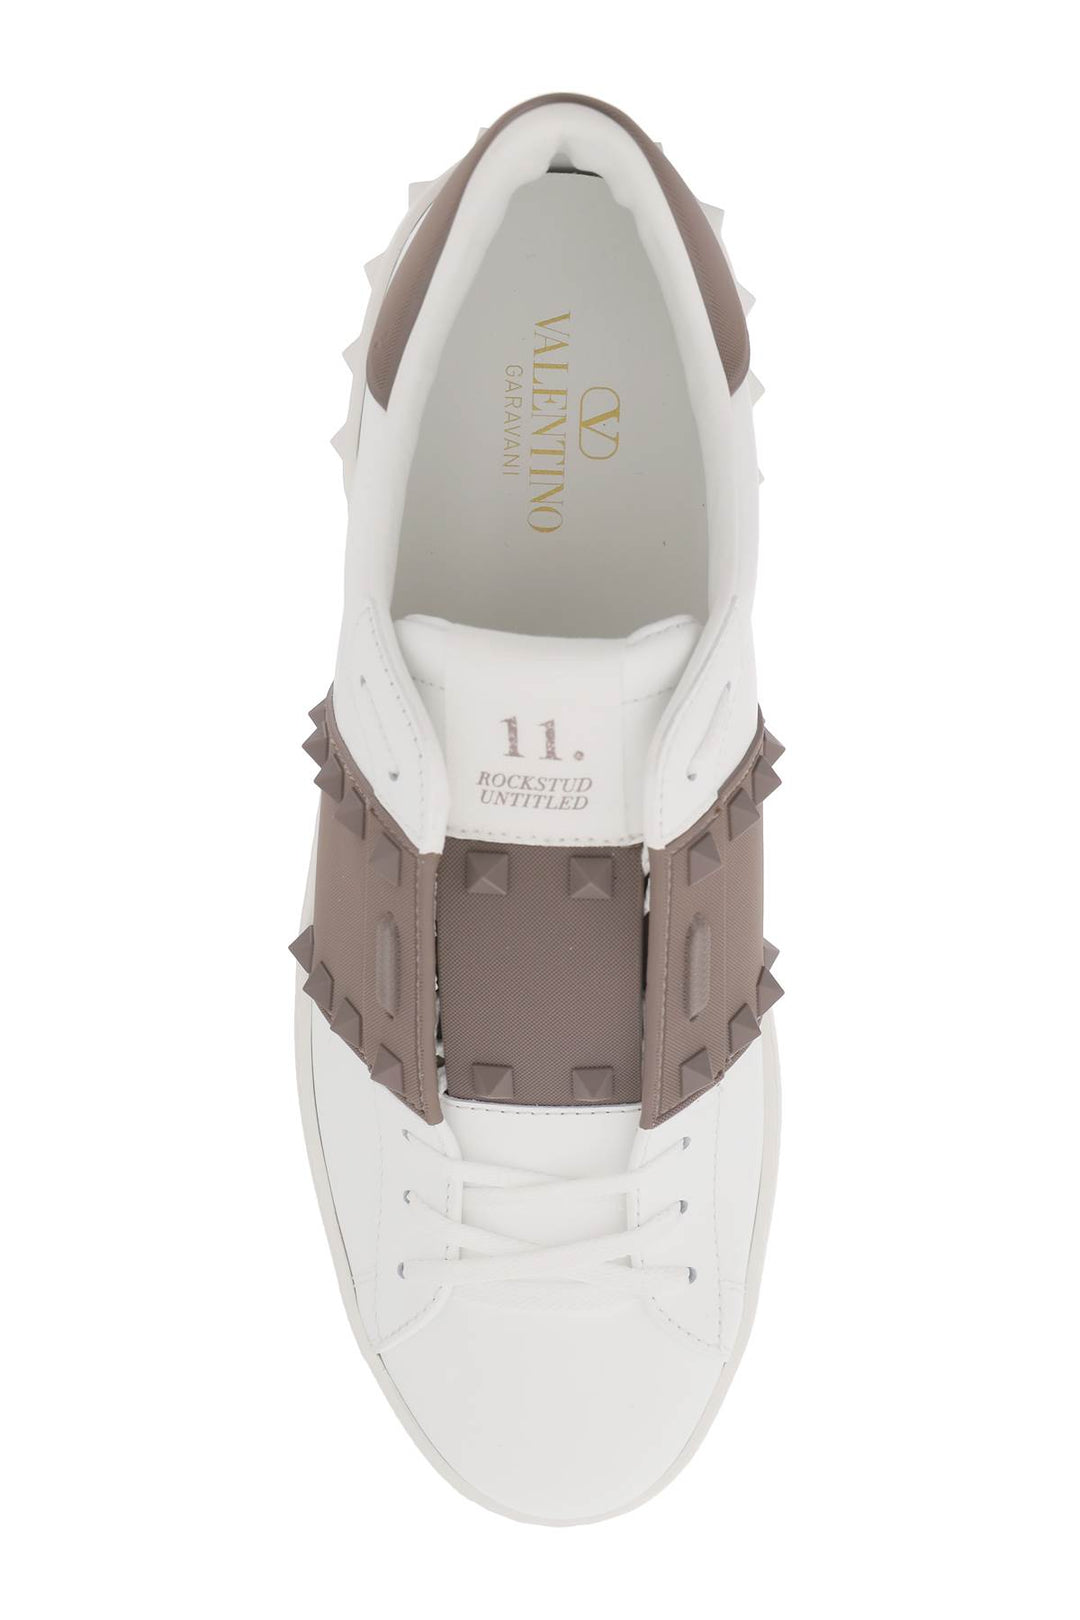 Valentino Garavani Rockstud Untitled Sneakers   White